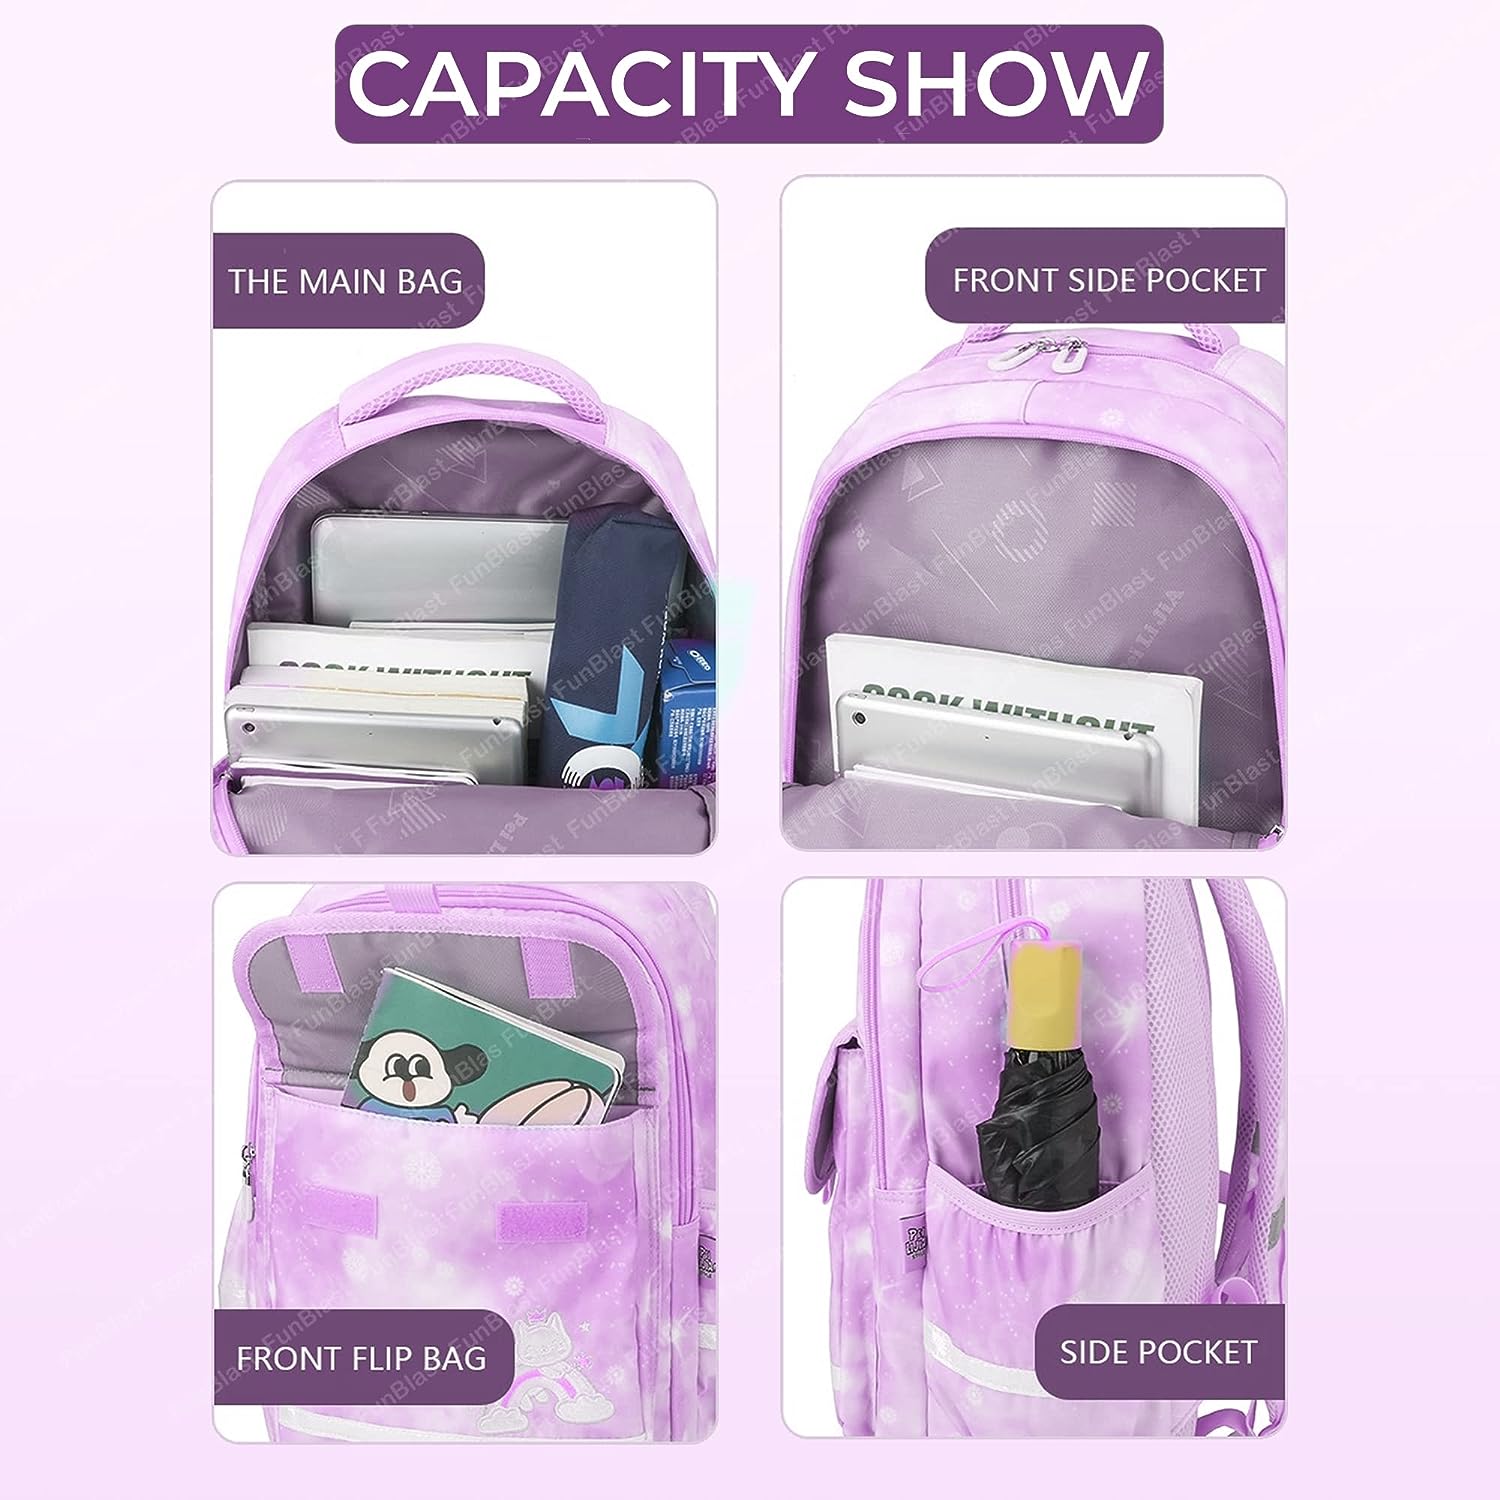 Mini flap bag & star coin purse, Mirror calfskin, metallic calfskin &  gold-tone metal, light purple — Fashion | CHANEL